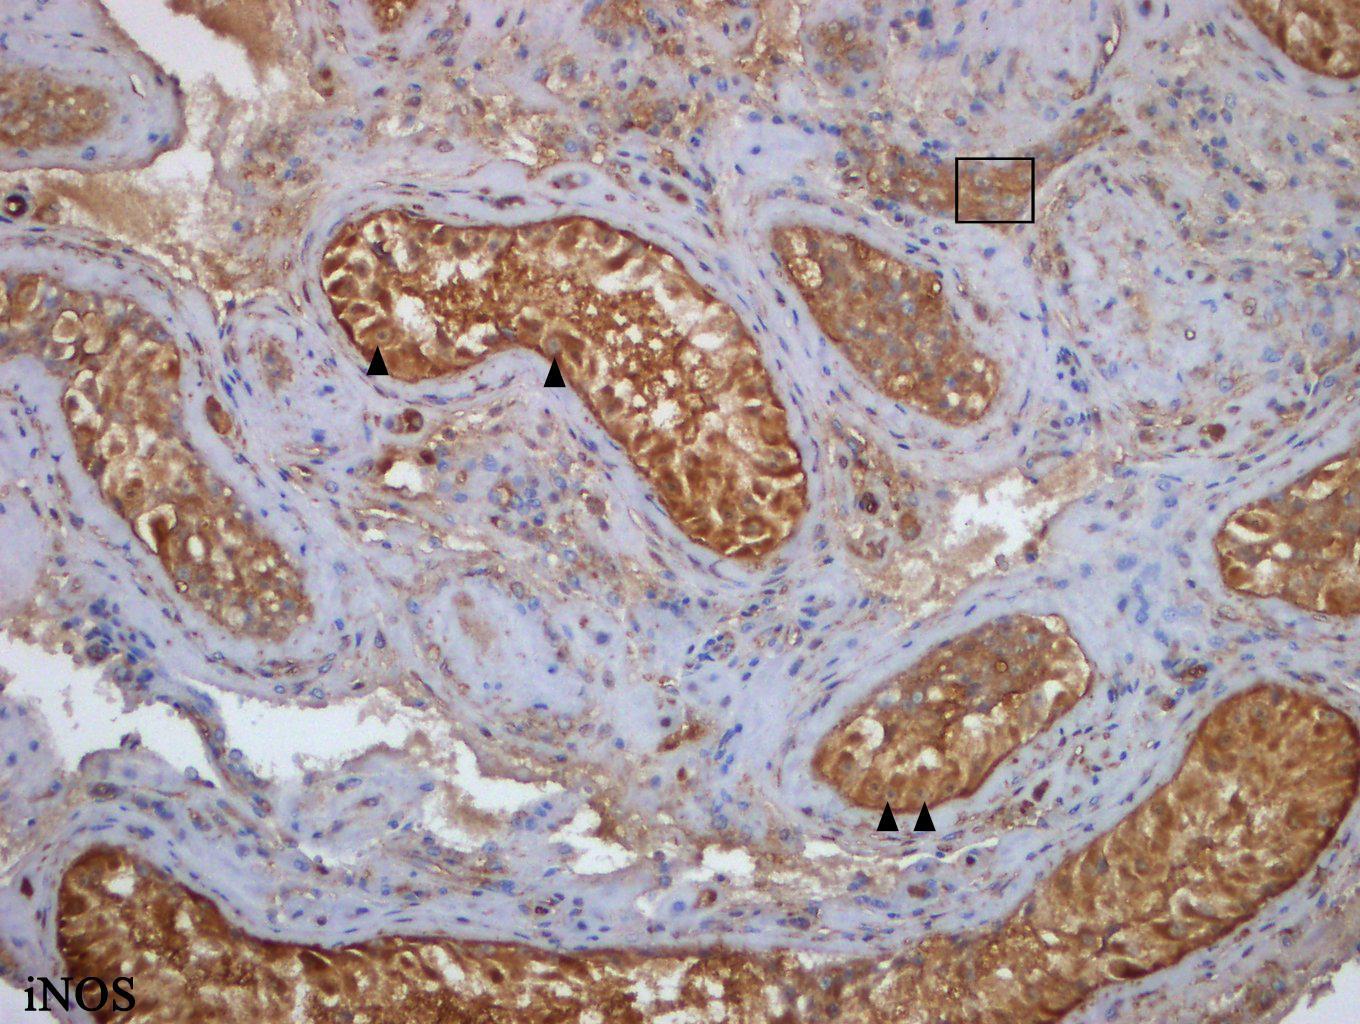 Bar: 50 μm Grafik 3: Spermatozoa içermeyen gruba ait inos immun